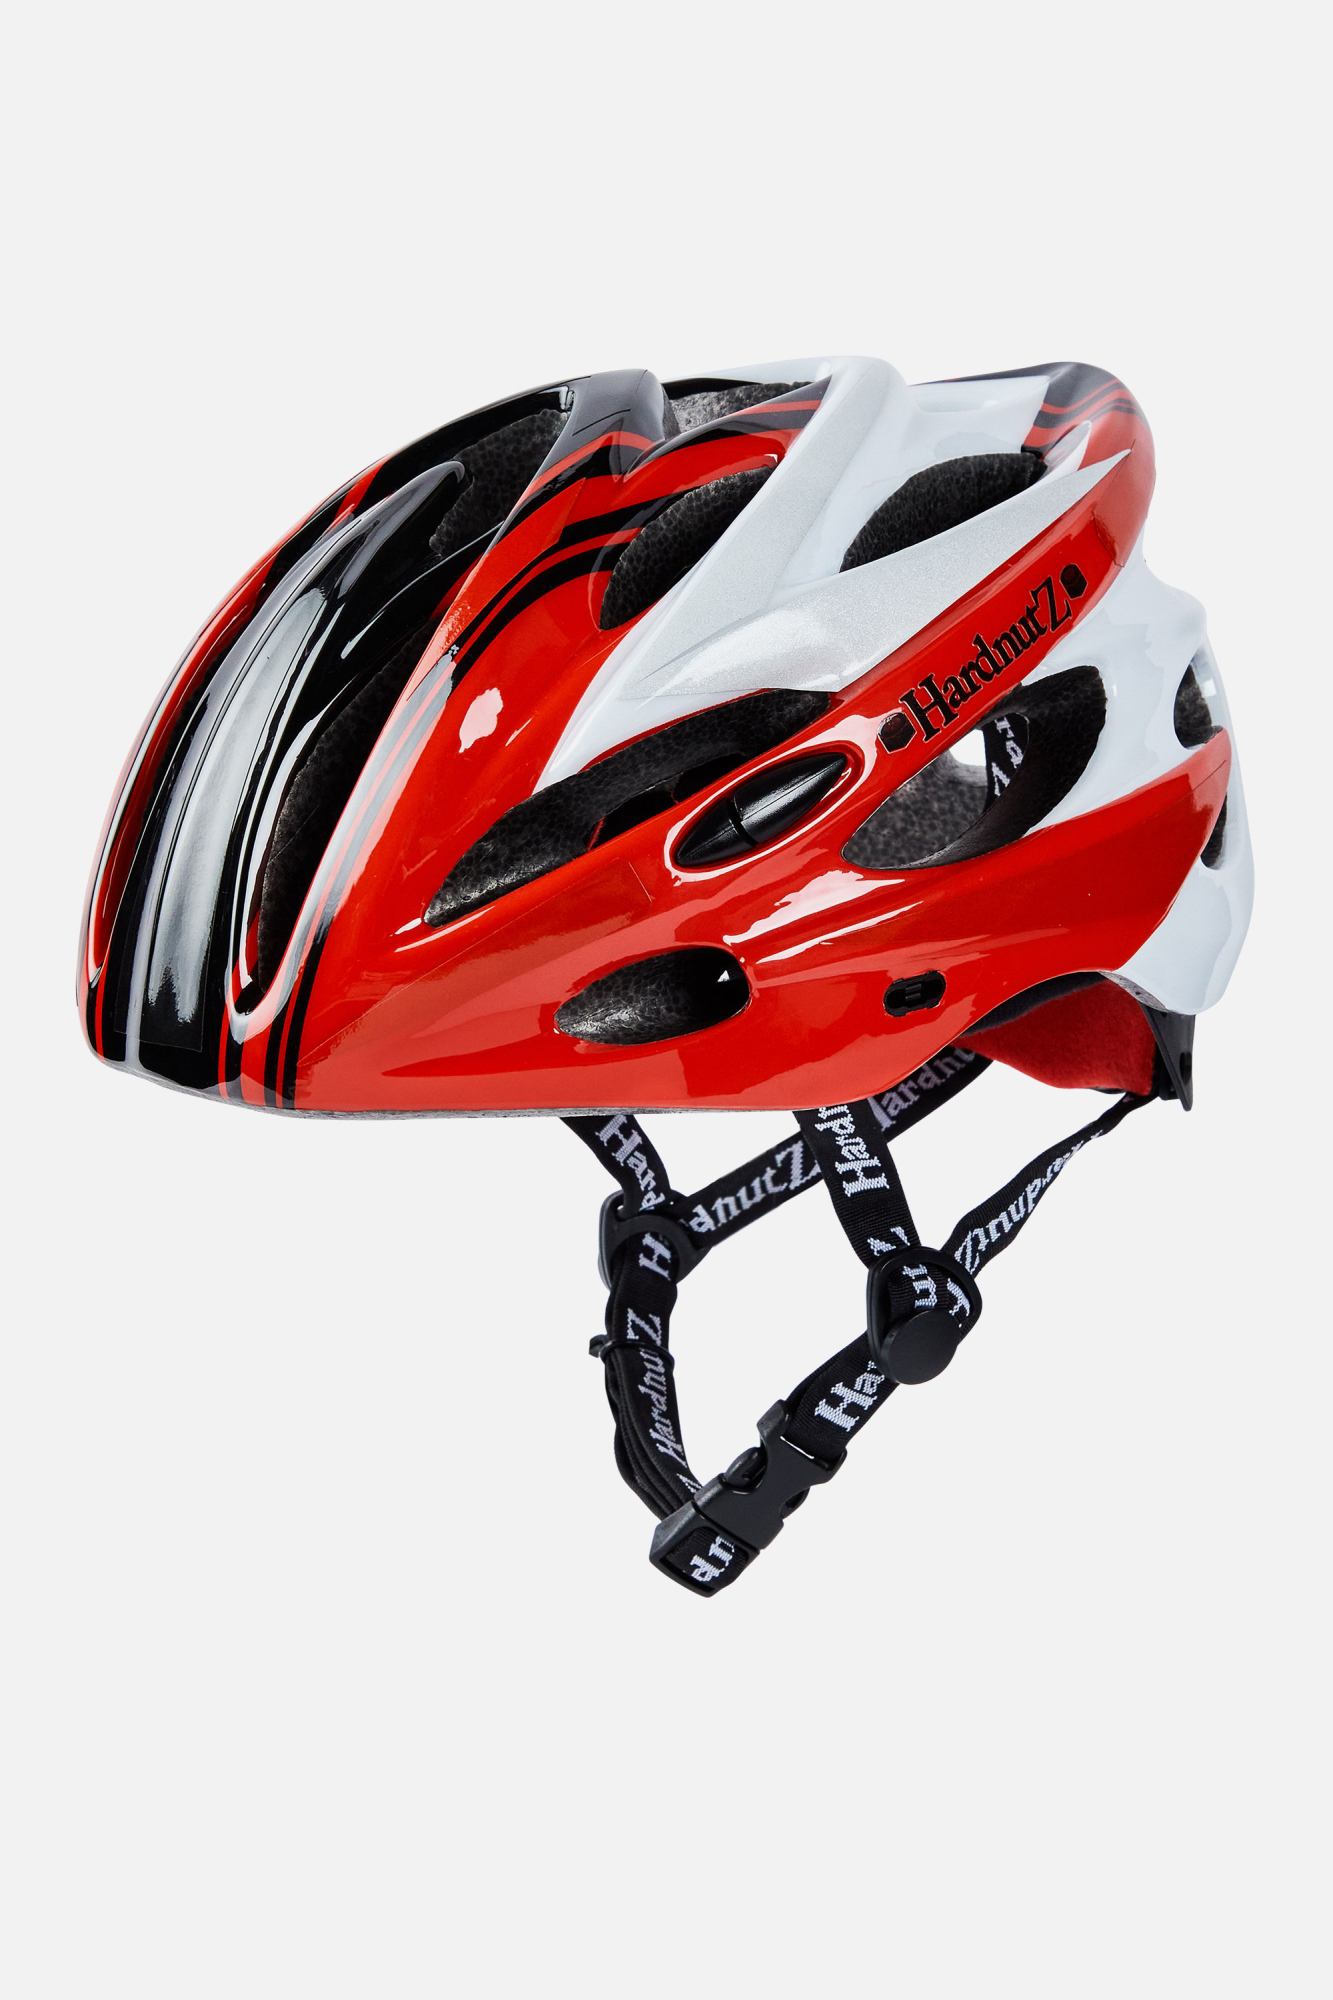 Hardnutz Unisex Cycle Helmet Red - Size: 54-61